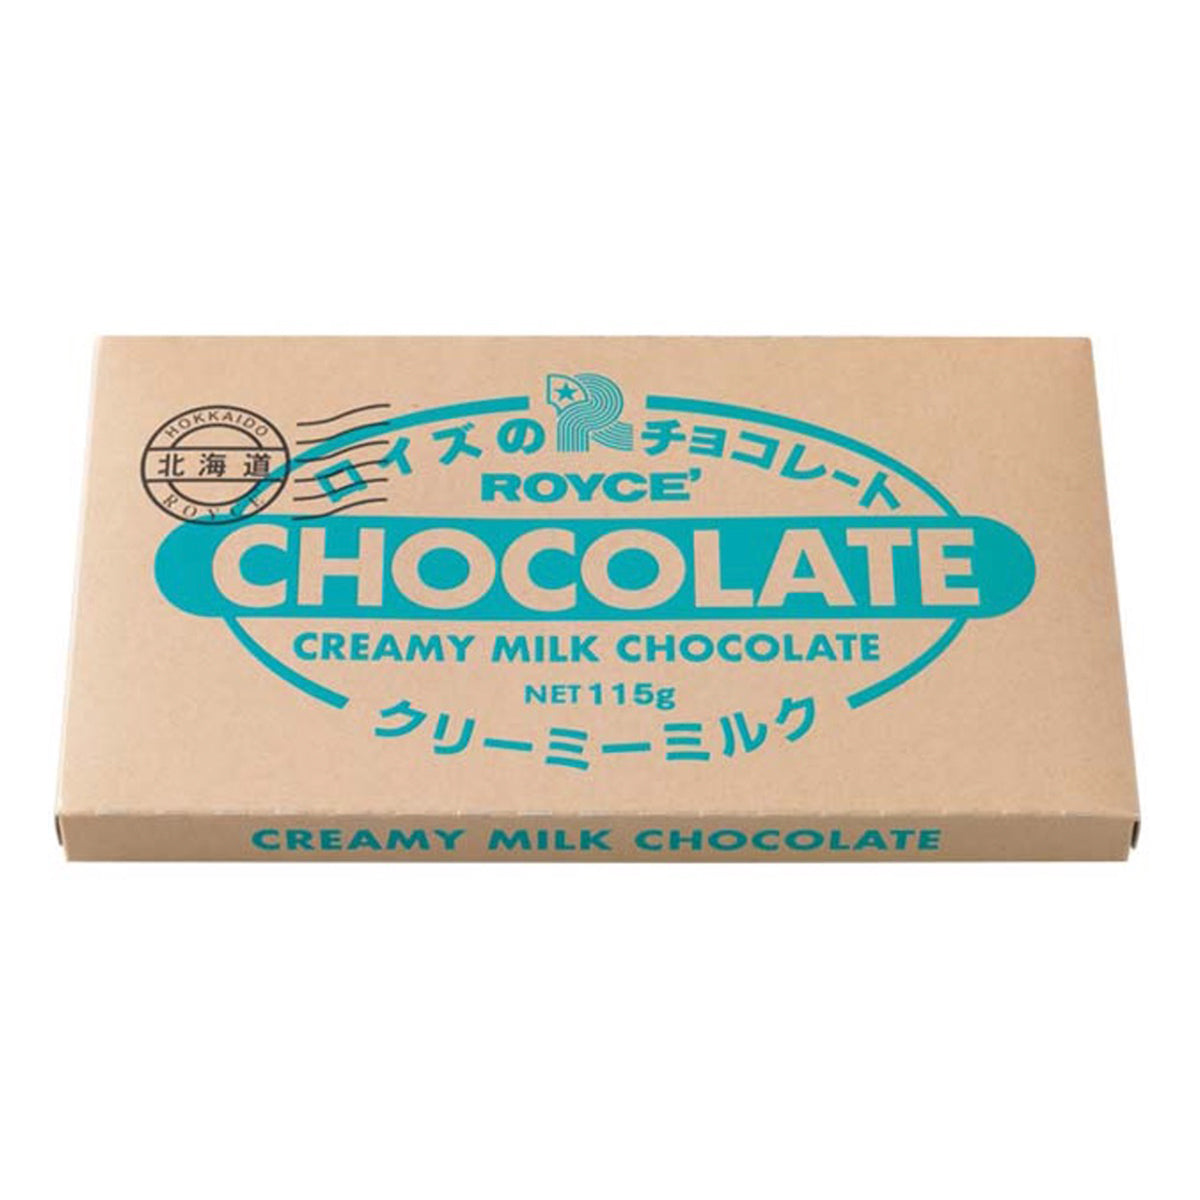 ROYCE' Chocolate Bar Selection